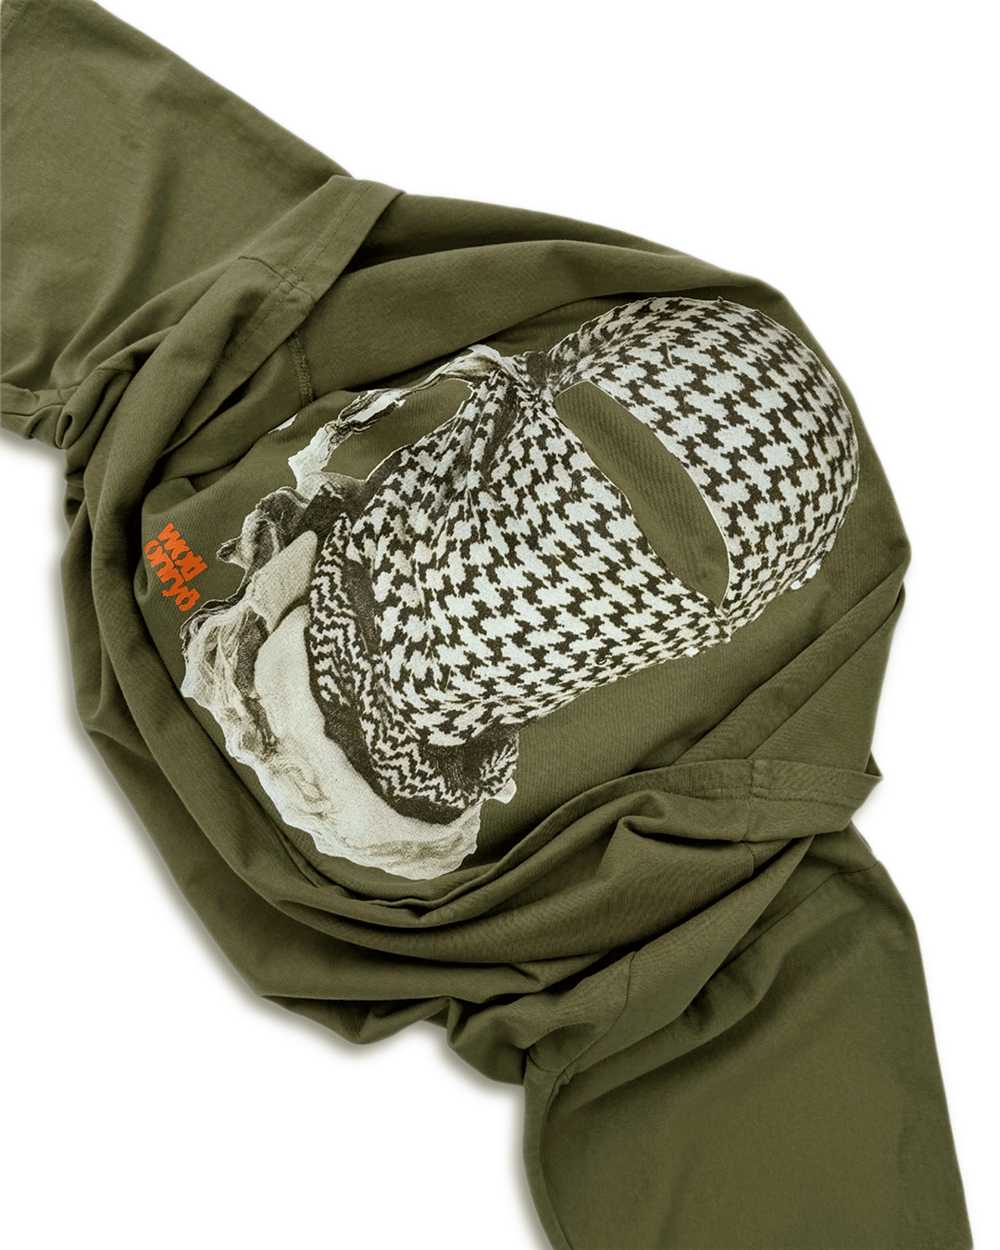 onryō x wotl - Olive T-Shirt - For Palestine